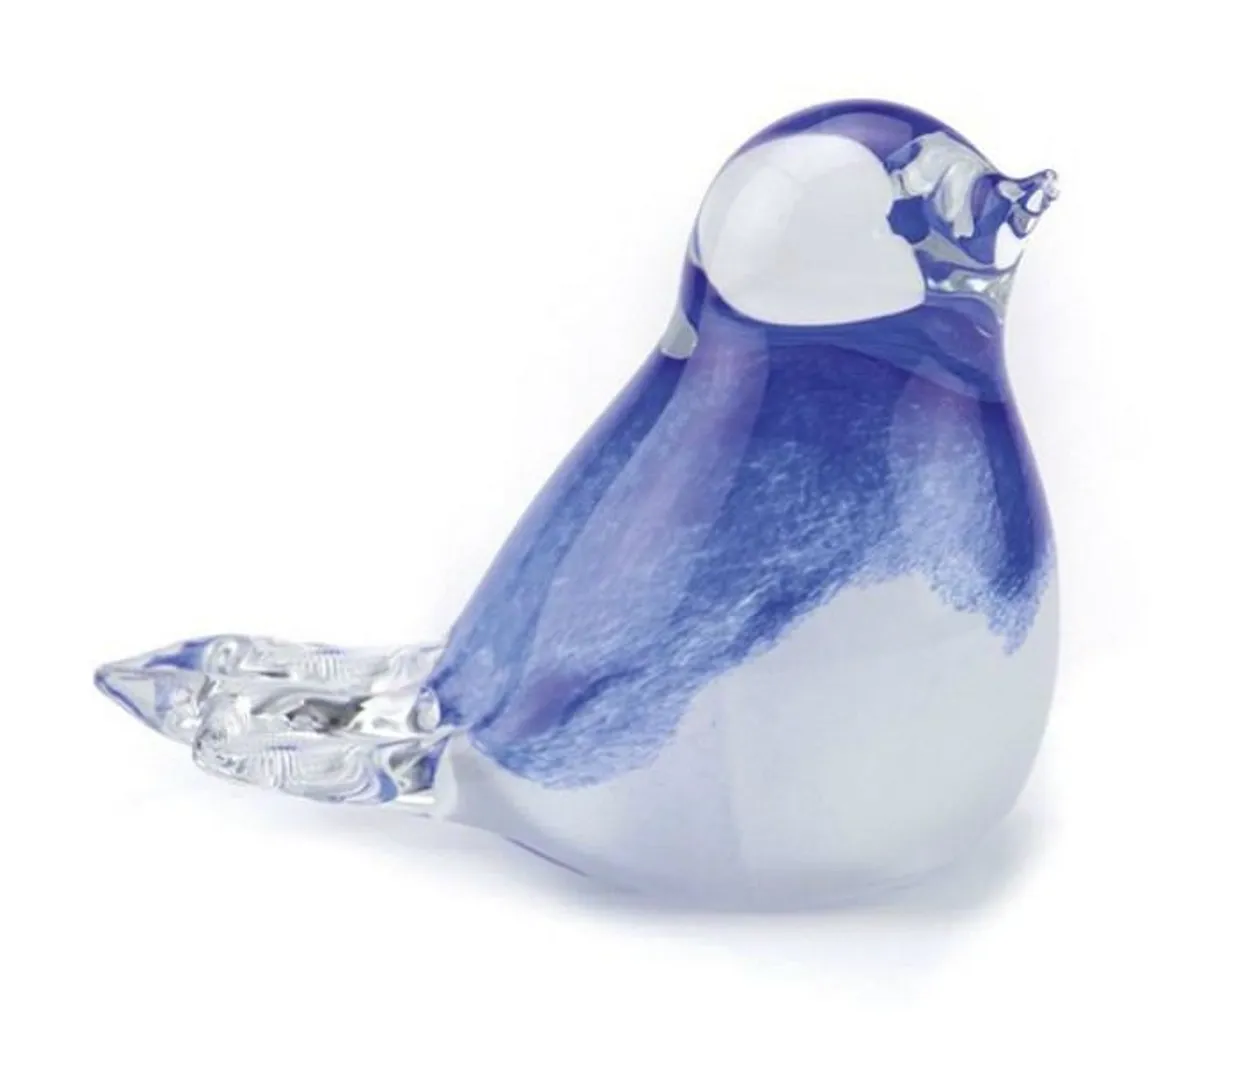 Vogel urn van glas in blauw met wit